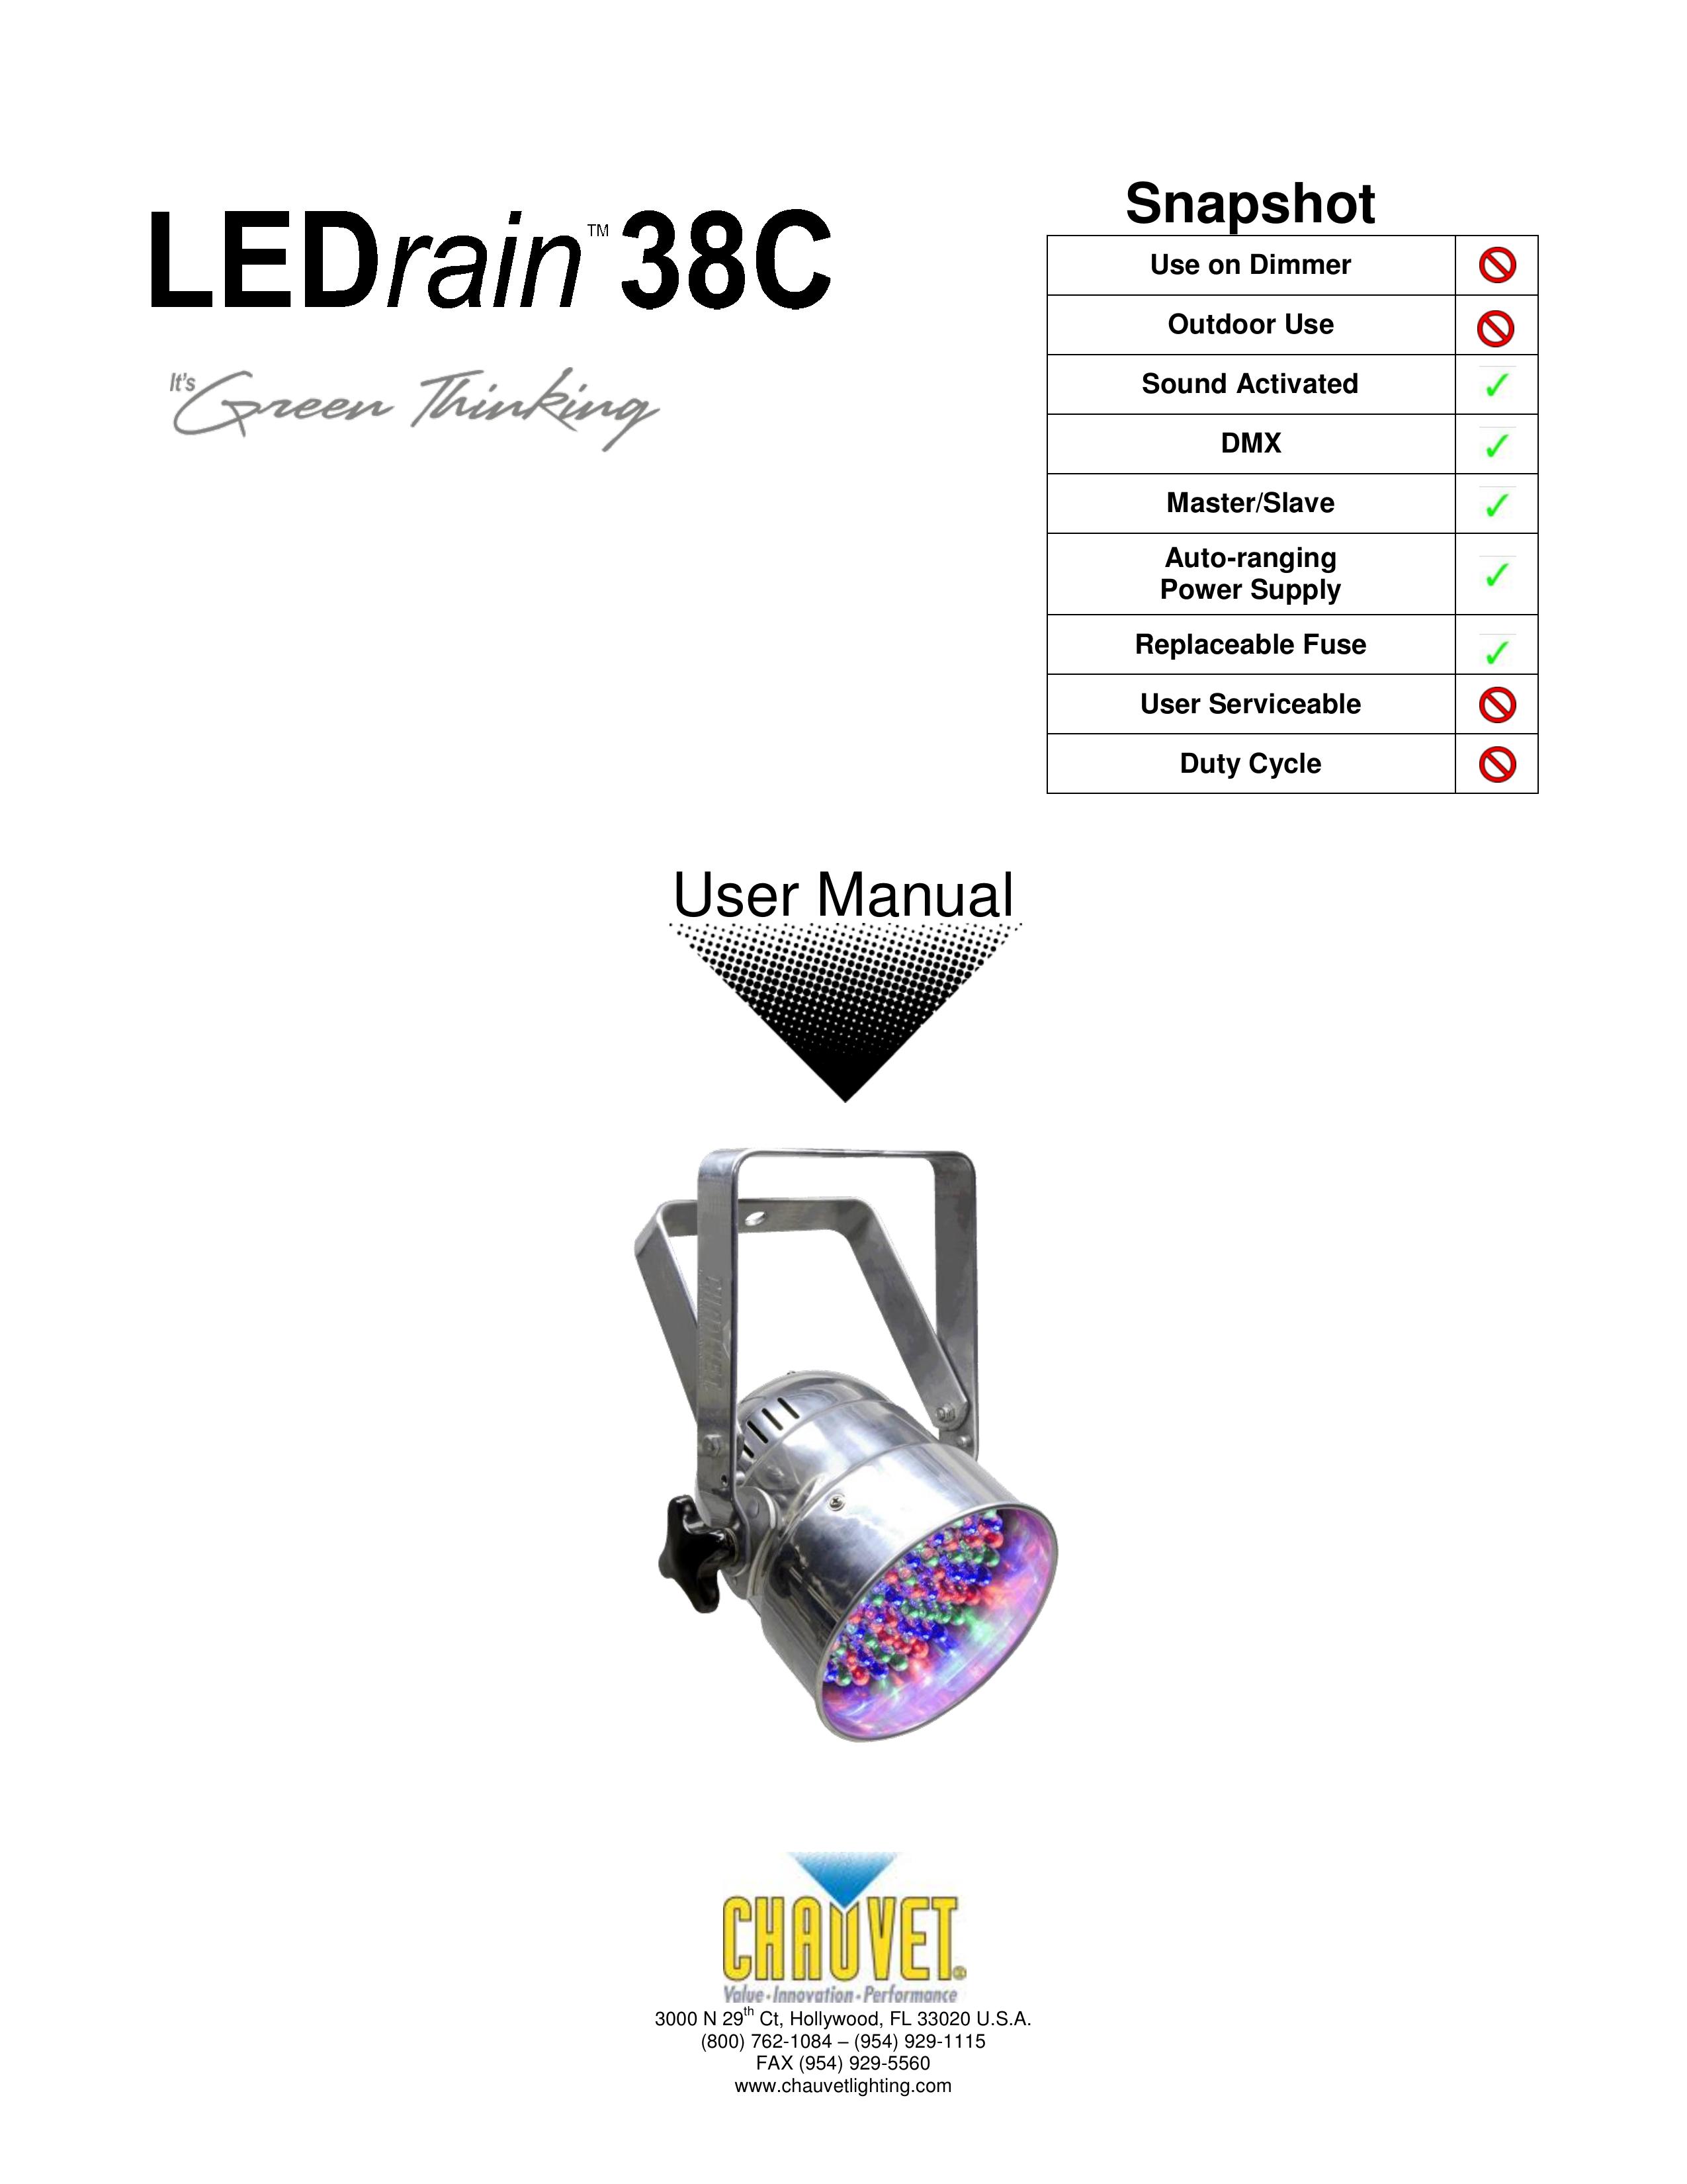 Chauvet LEDrain 38c Marine Lighting User Manual